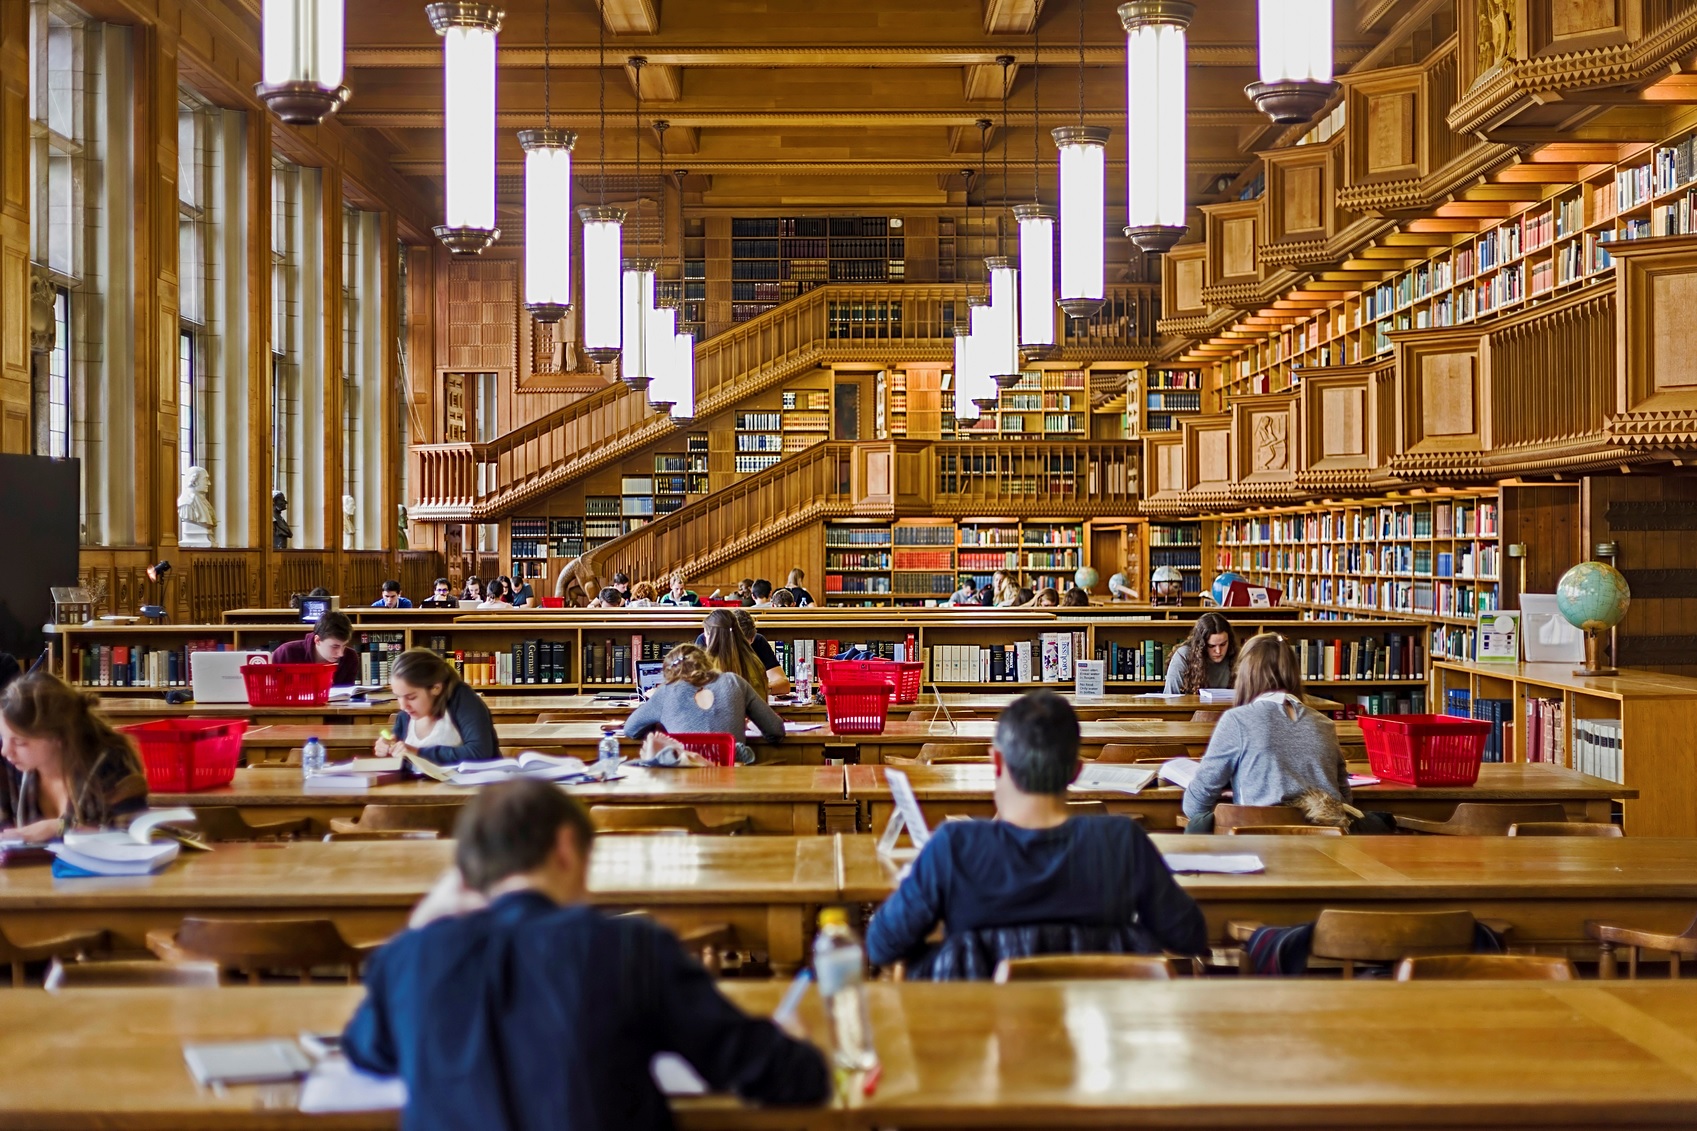 University Library Leuven-Louvain Belgium 01.jpg